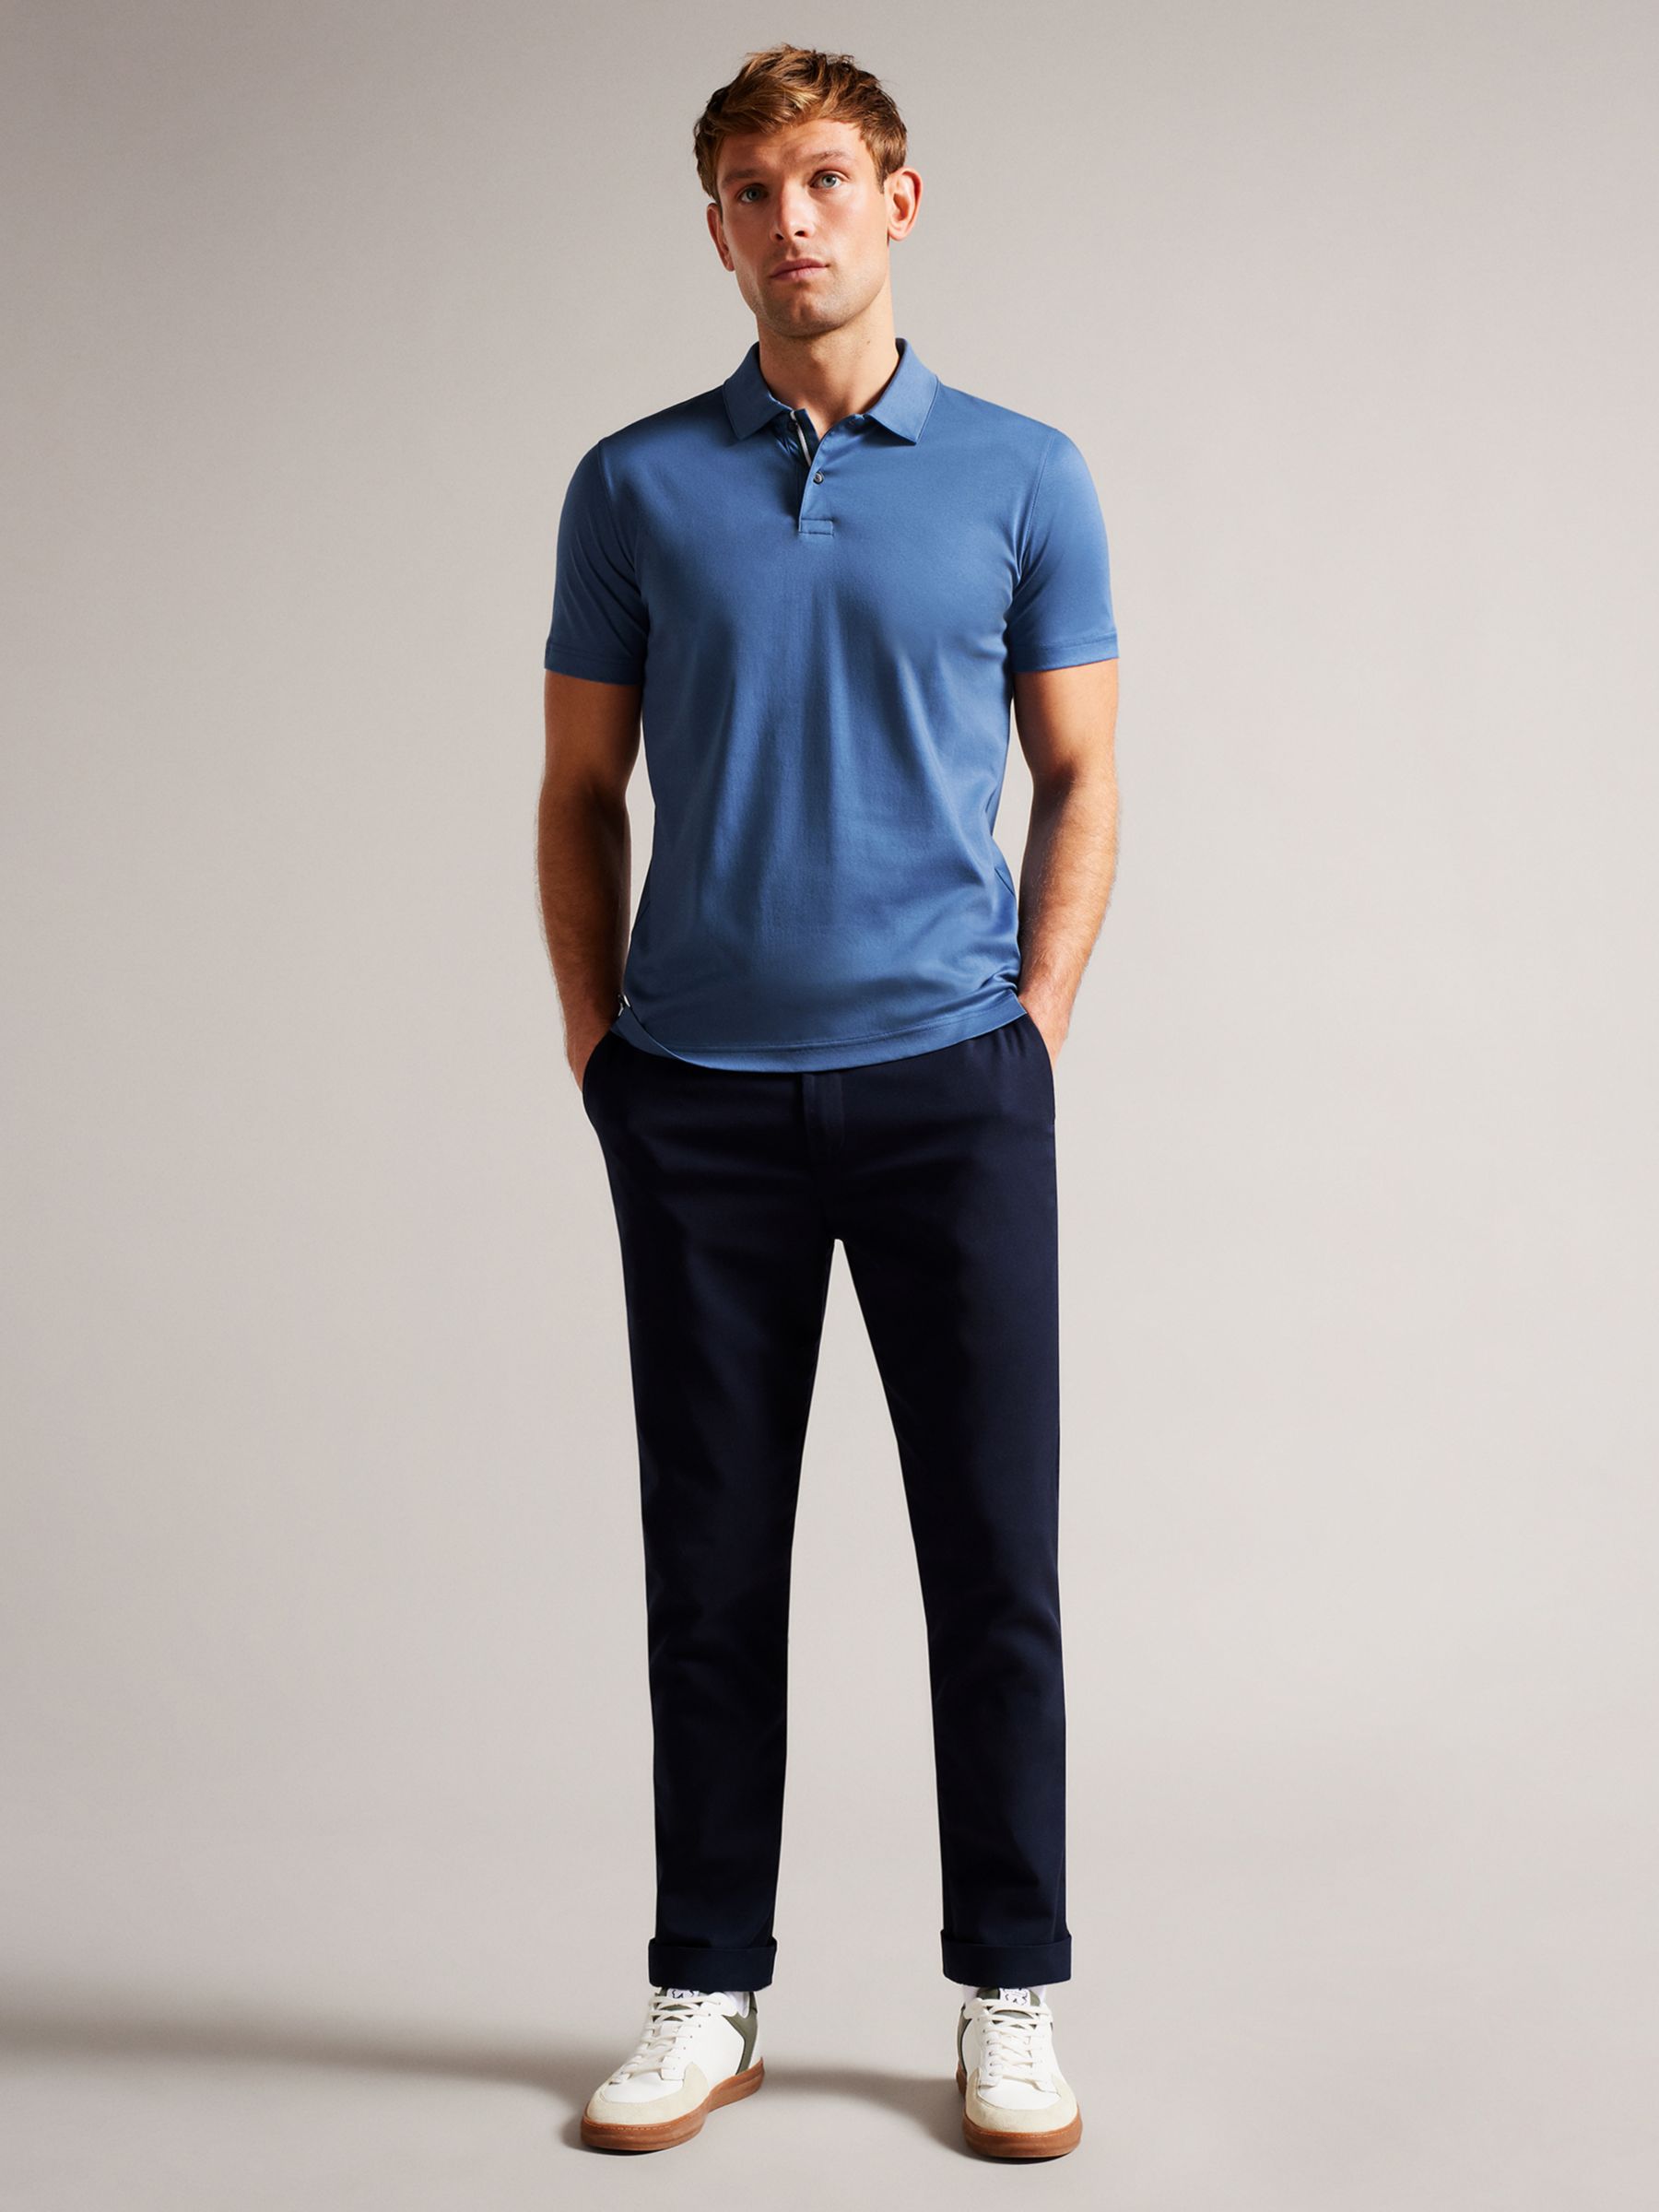 Ted Baker Zeiter Slim Fit Polo Shirt, Dark Blue at John Lewis & Partners